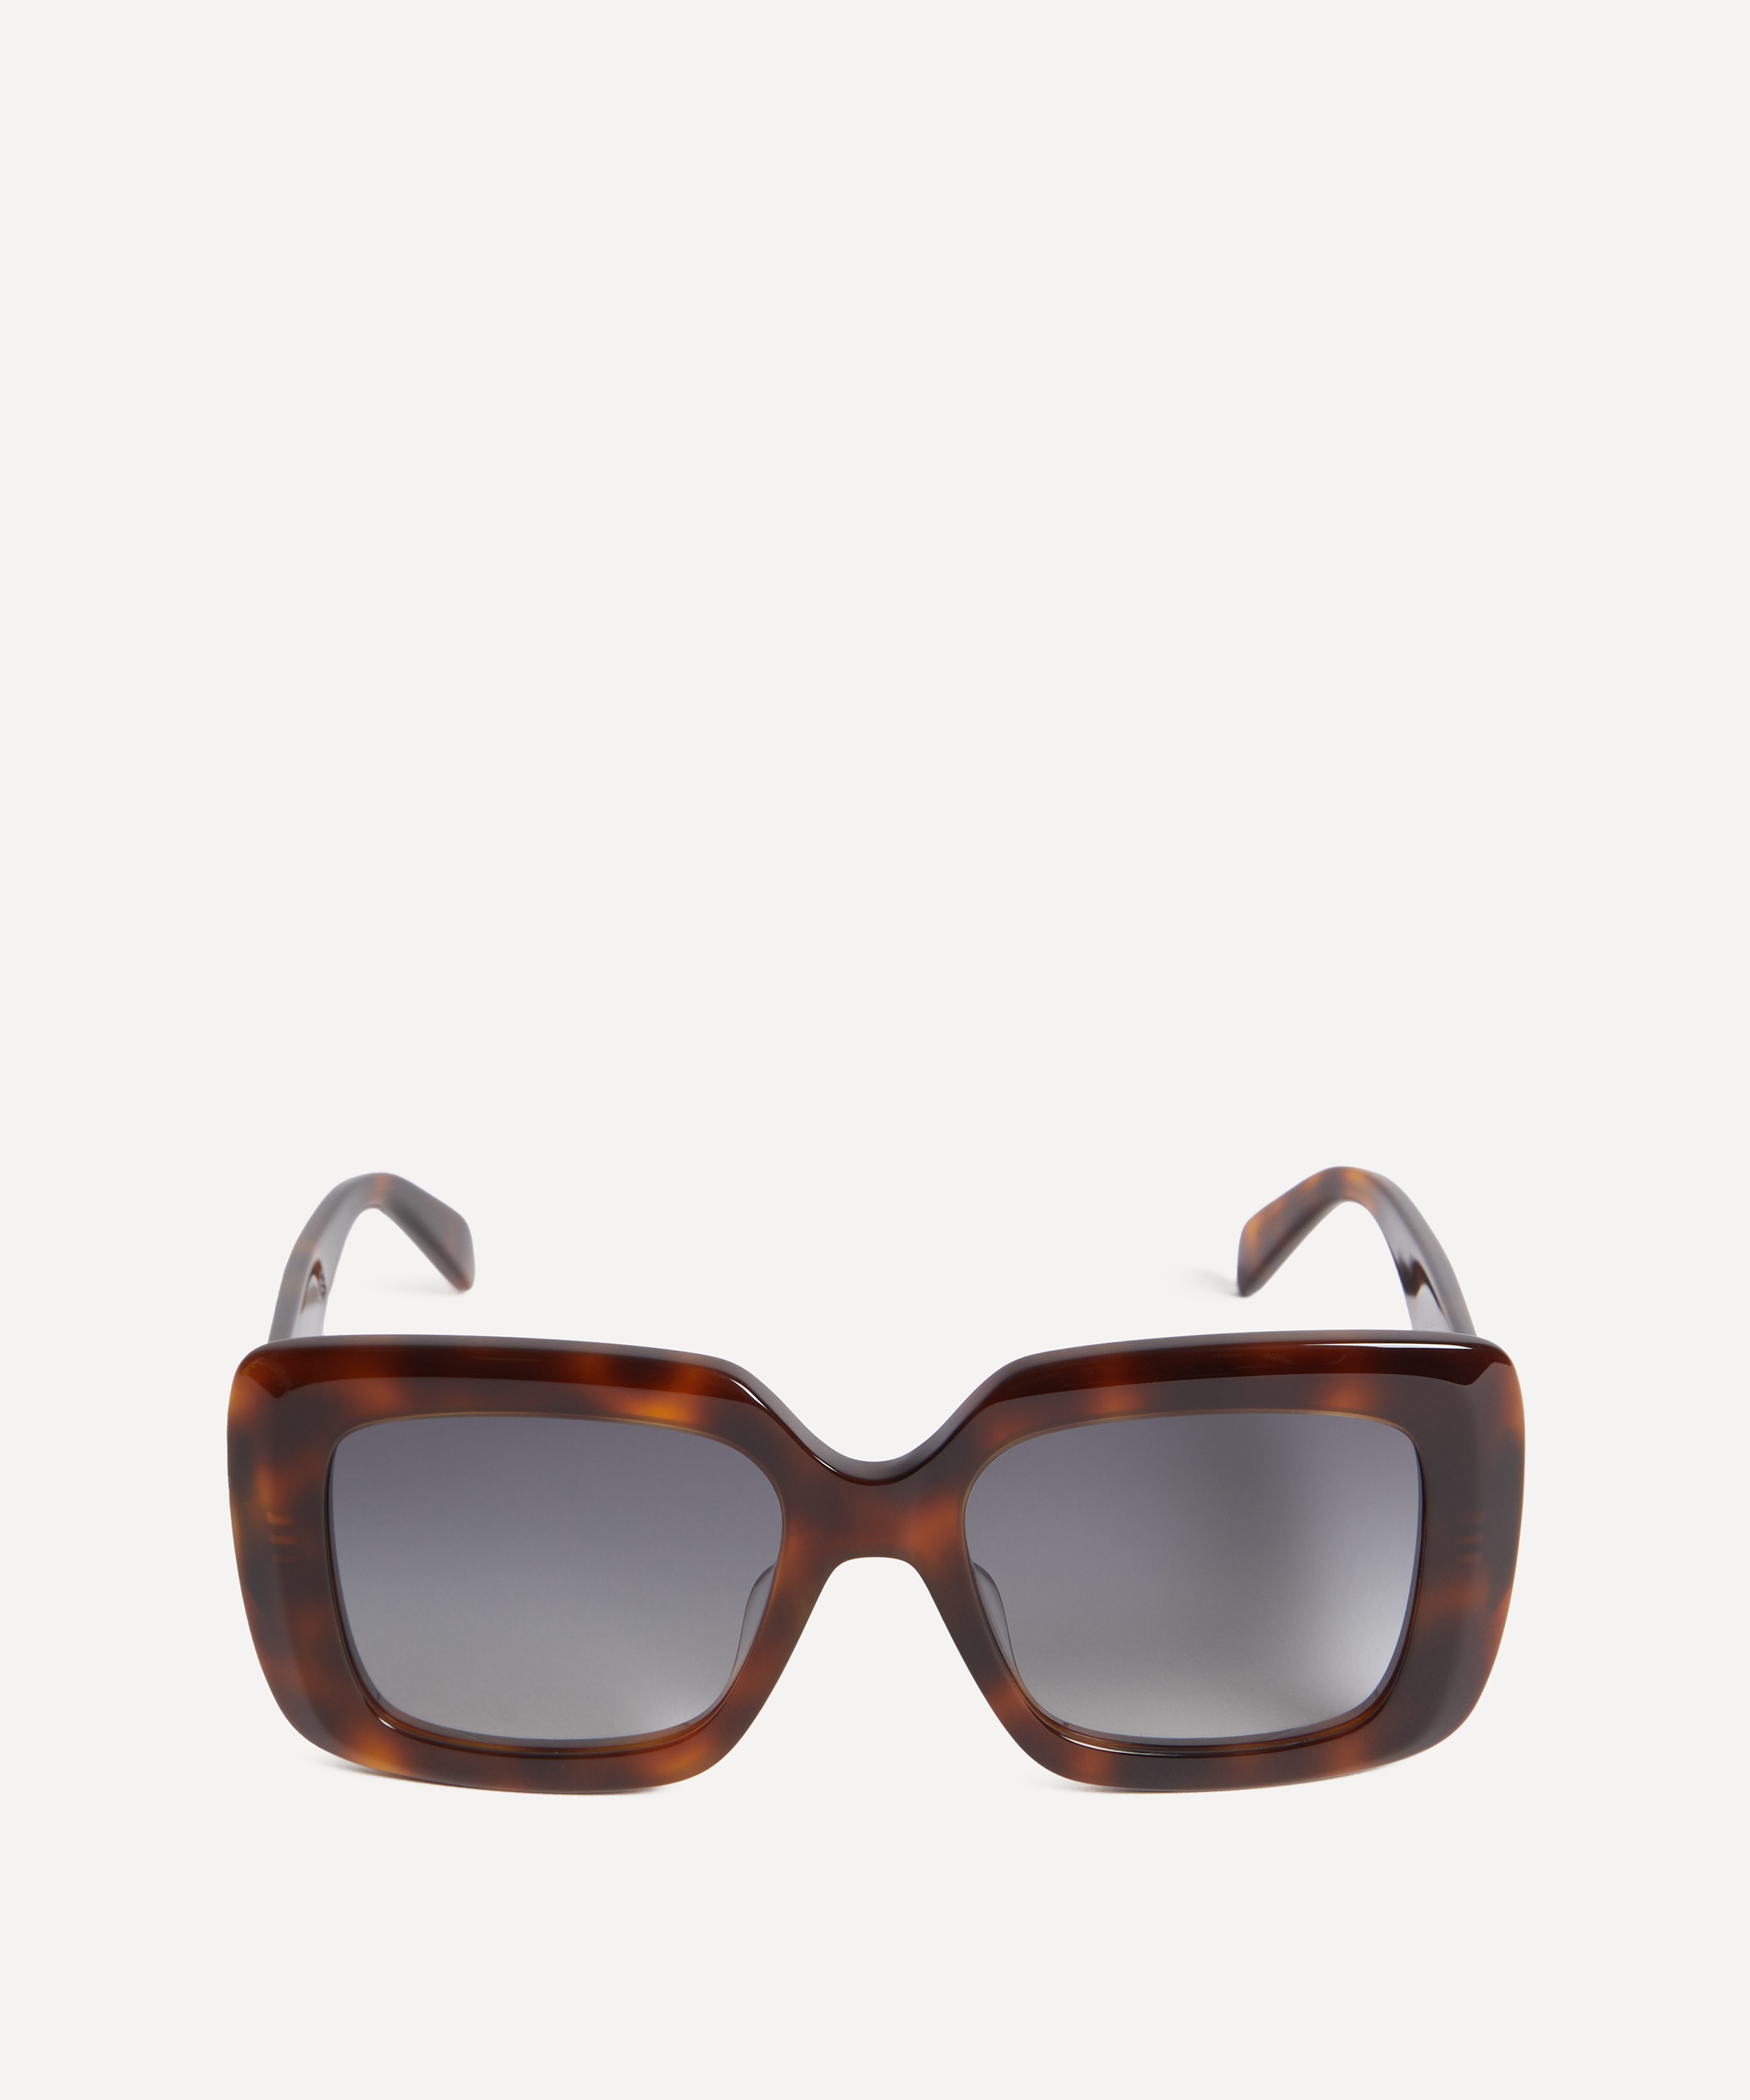 Celine - Oversized Square Sunglasses